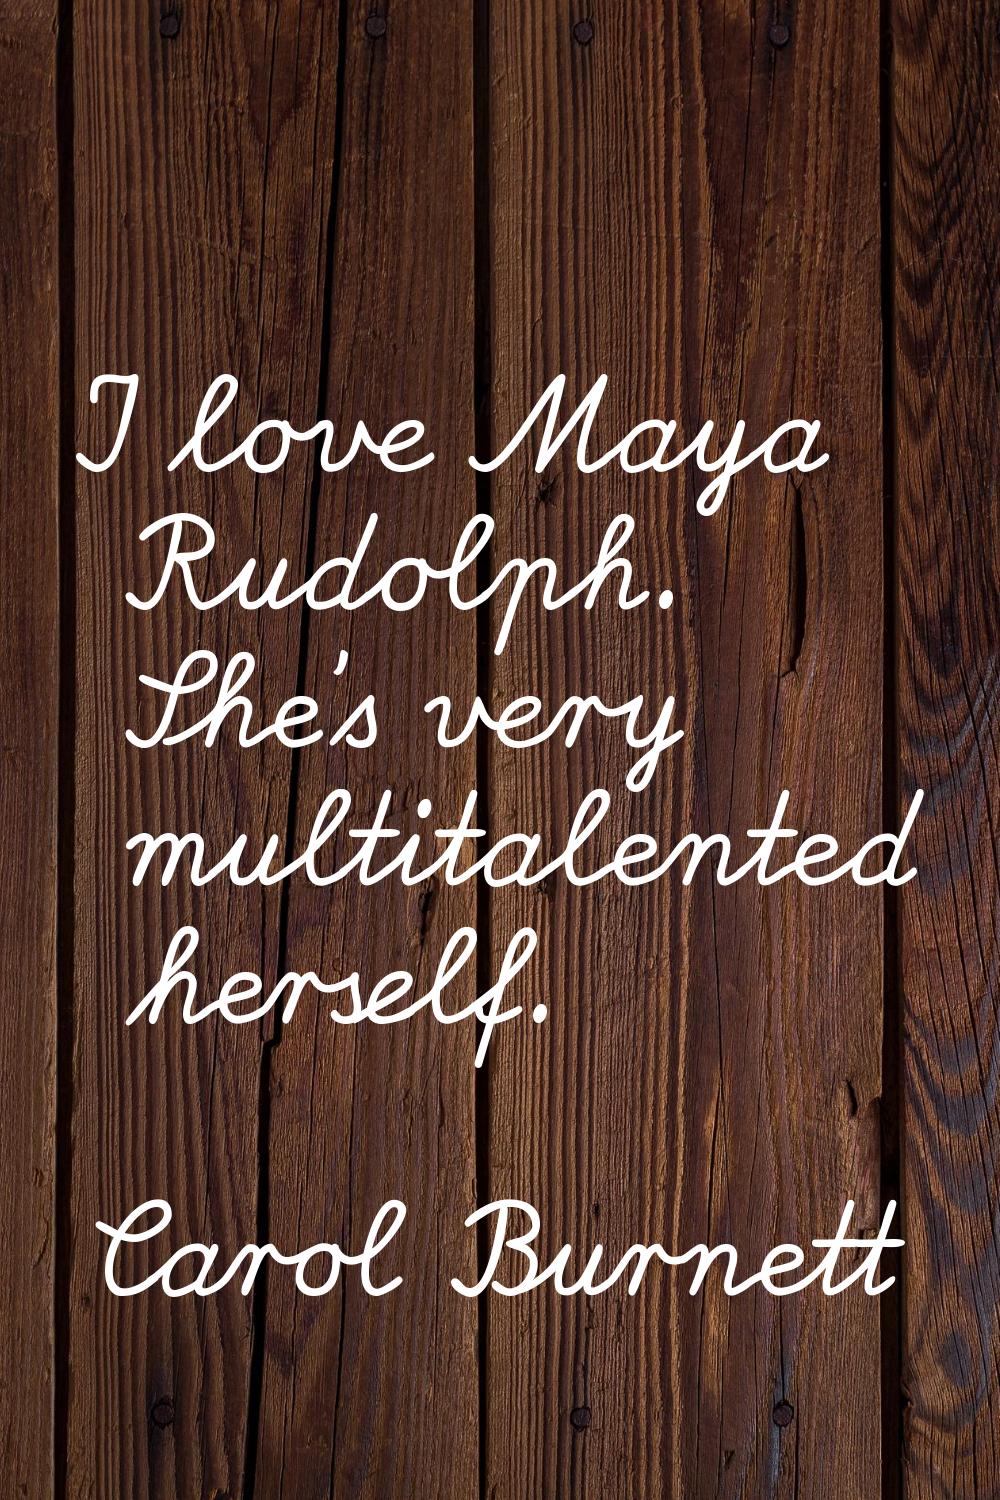 I love Maya Rudolph. She's very multitalented herself.